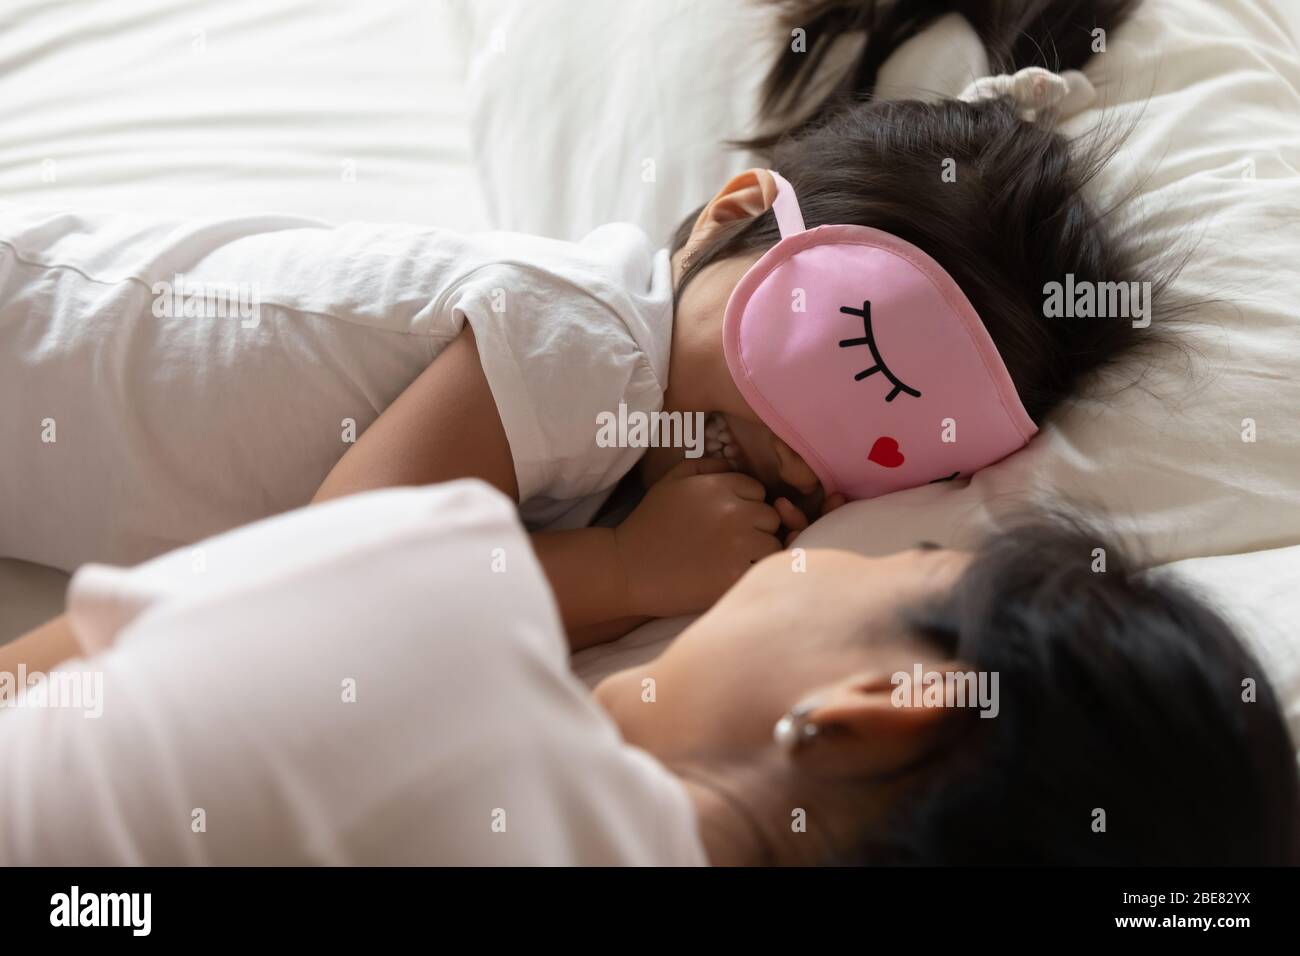 Small girl wears sleeping eyemask lying in bed with mother Stock Photo